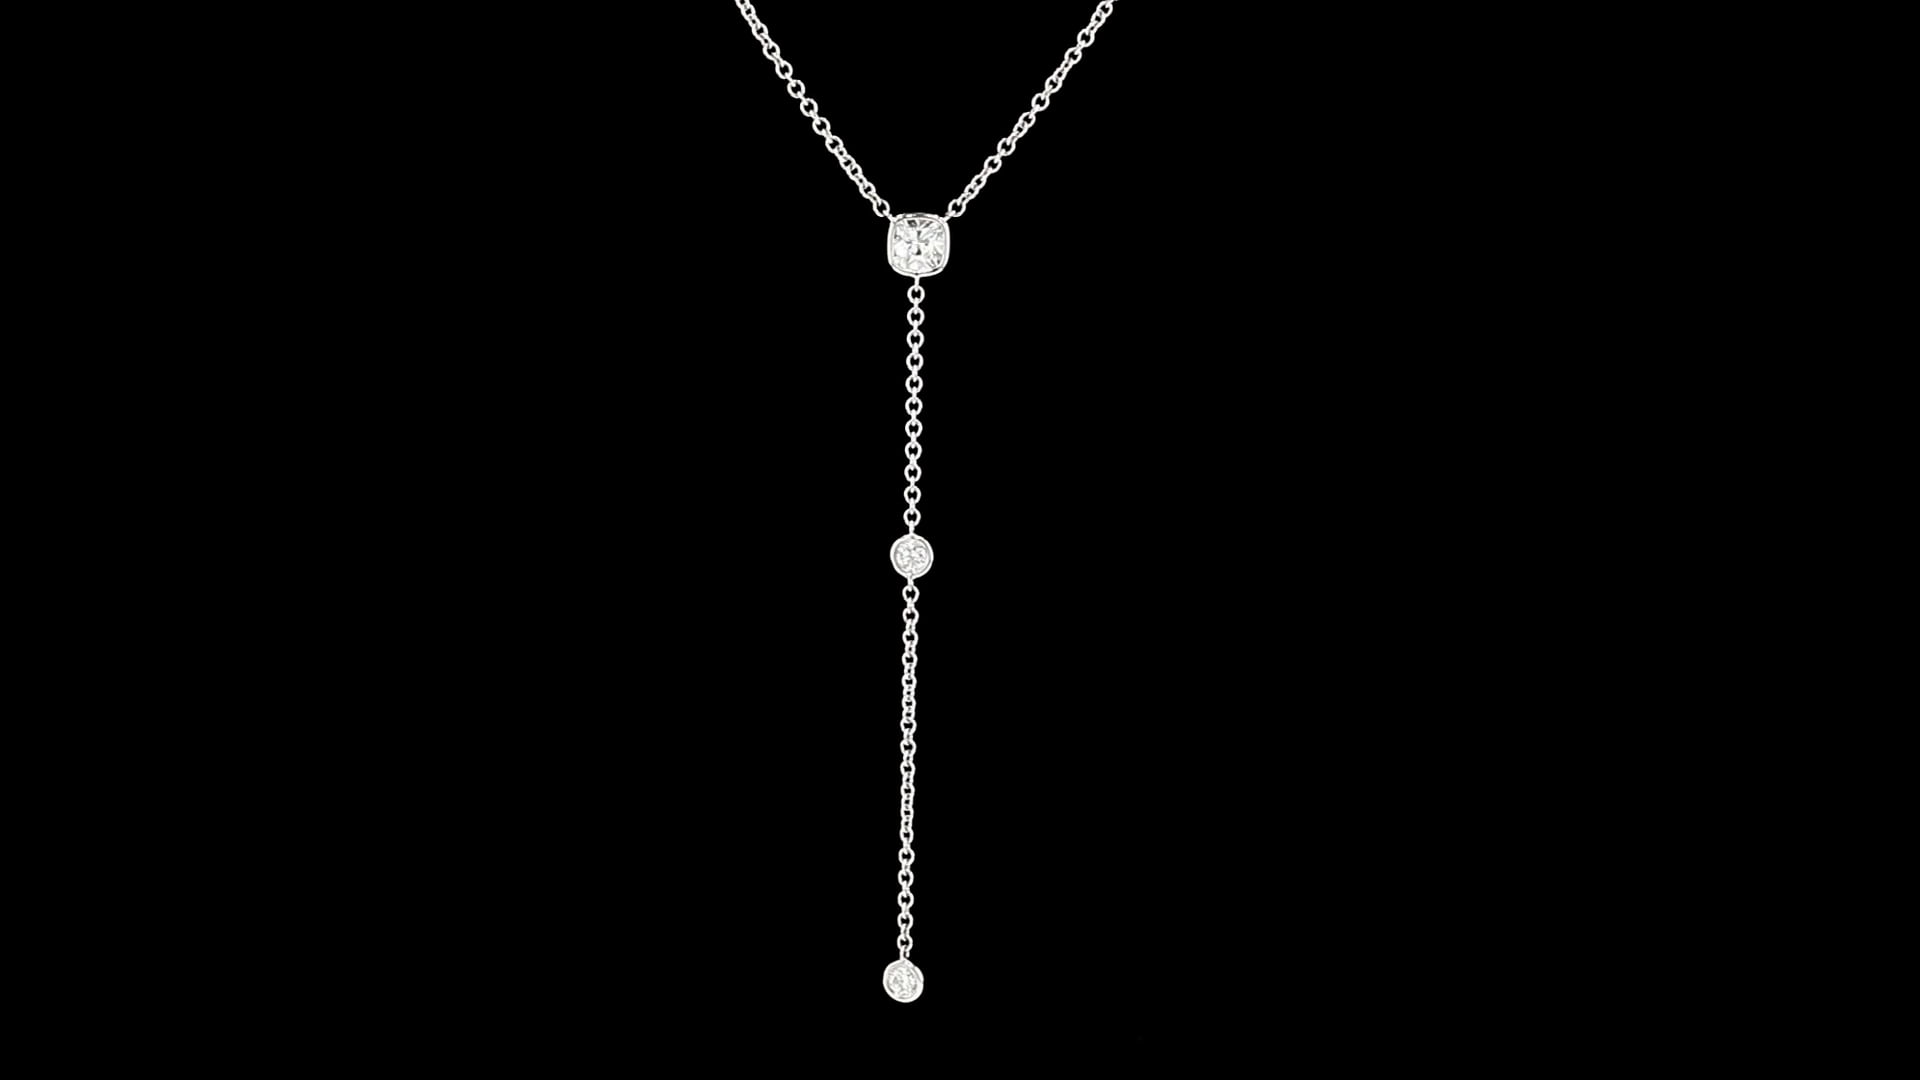 8 Carat, White Gold All Around Diamond Necklace | Lee Michaels Fine Jewelry